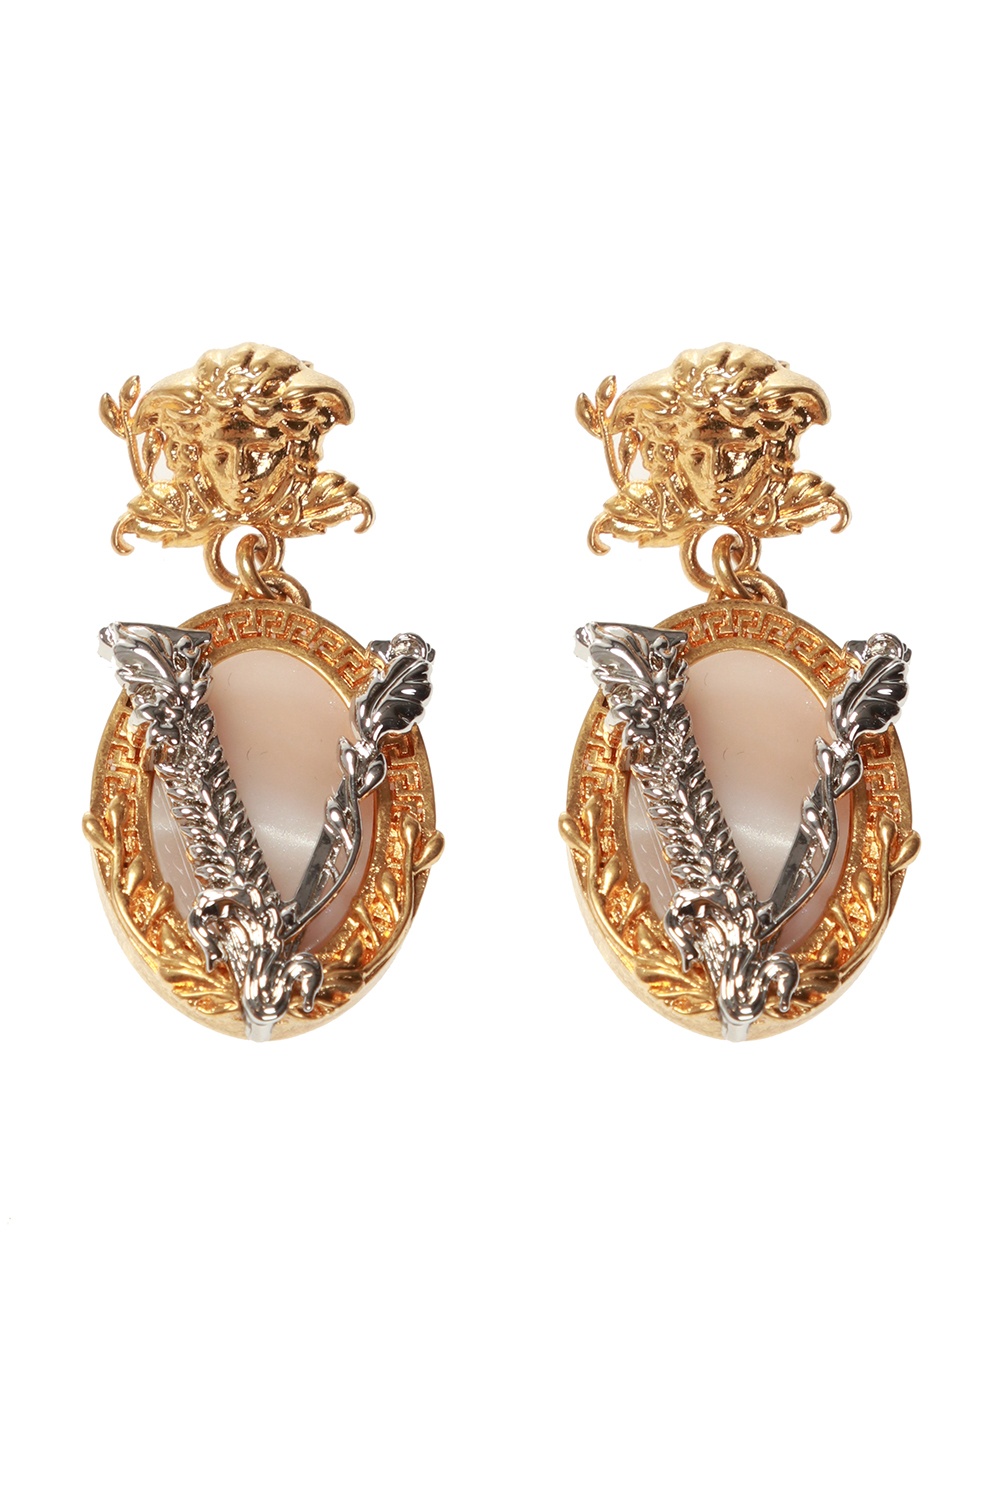 versace earrings canada